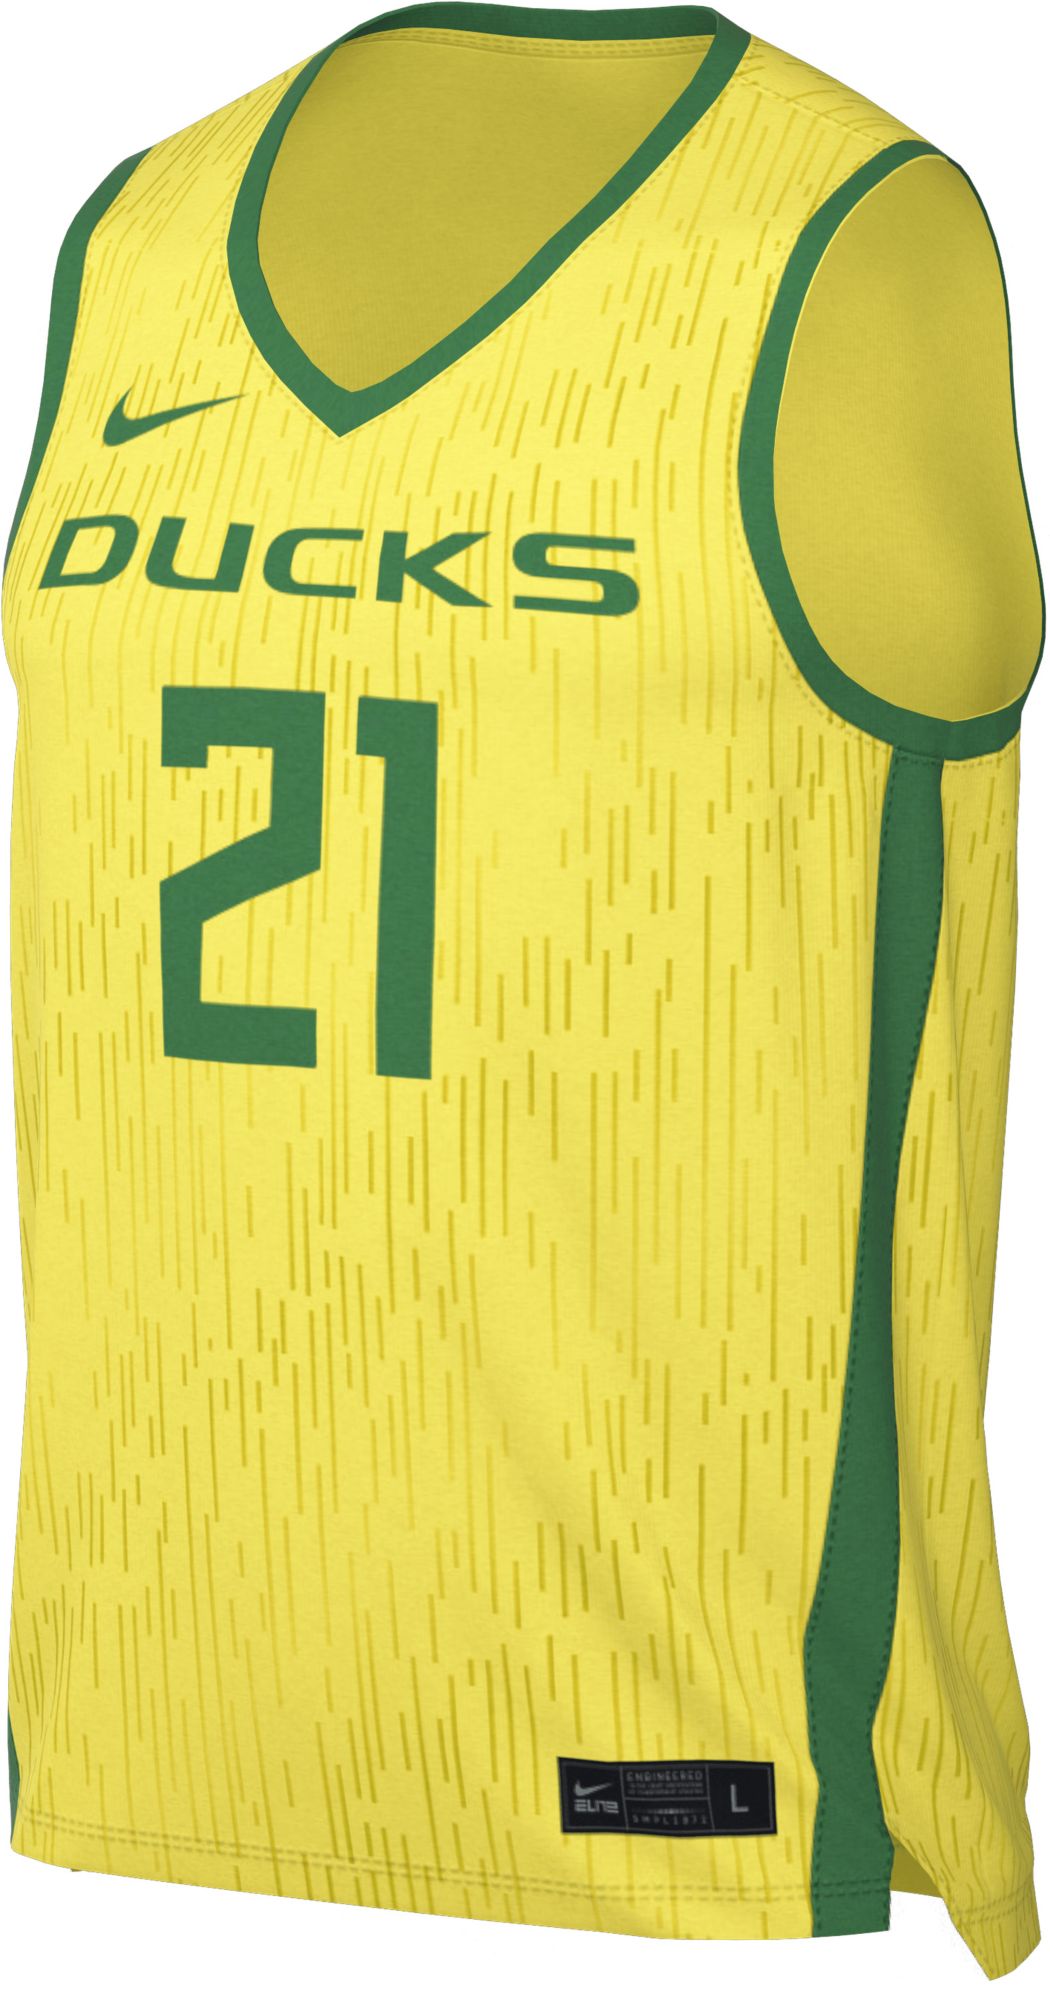 Oregon Ducks Men's Basketball Team-Worn #54 Dark Gray and Yellow